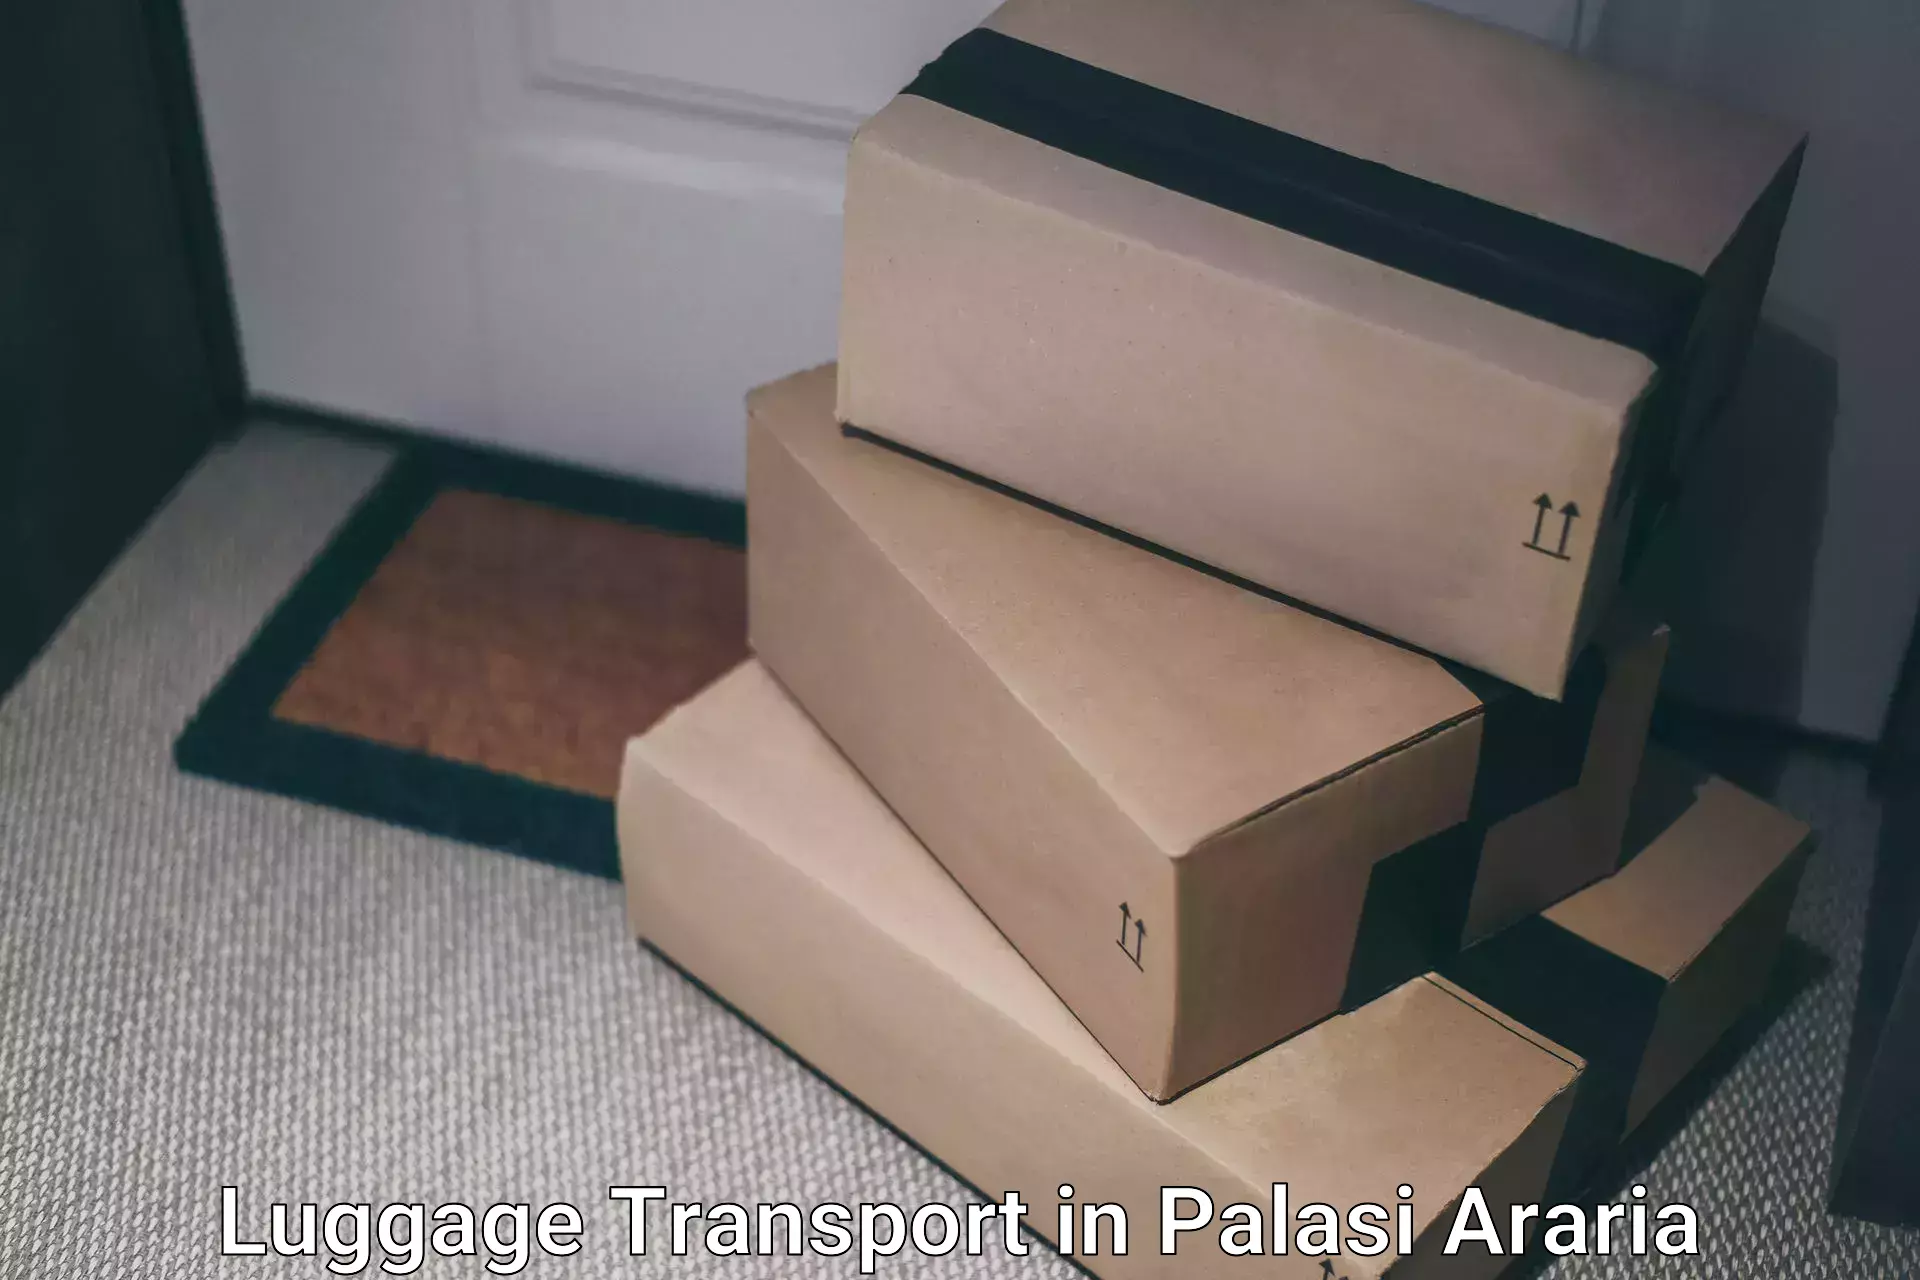 Baggage transport professionals in Palasi Araria